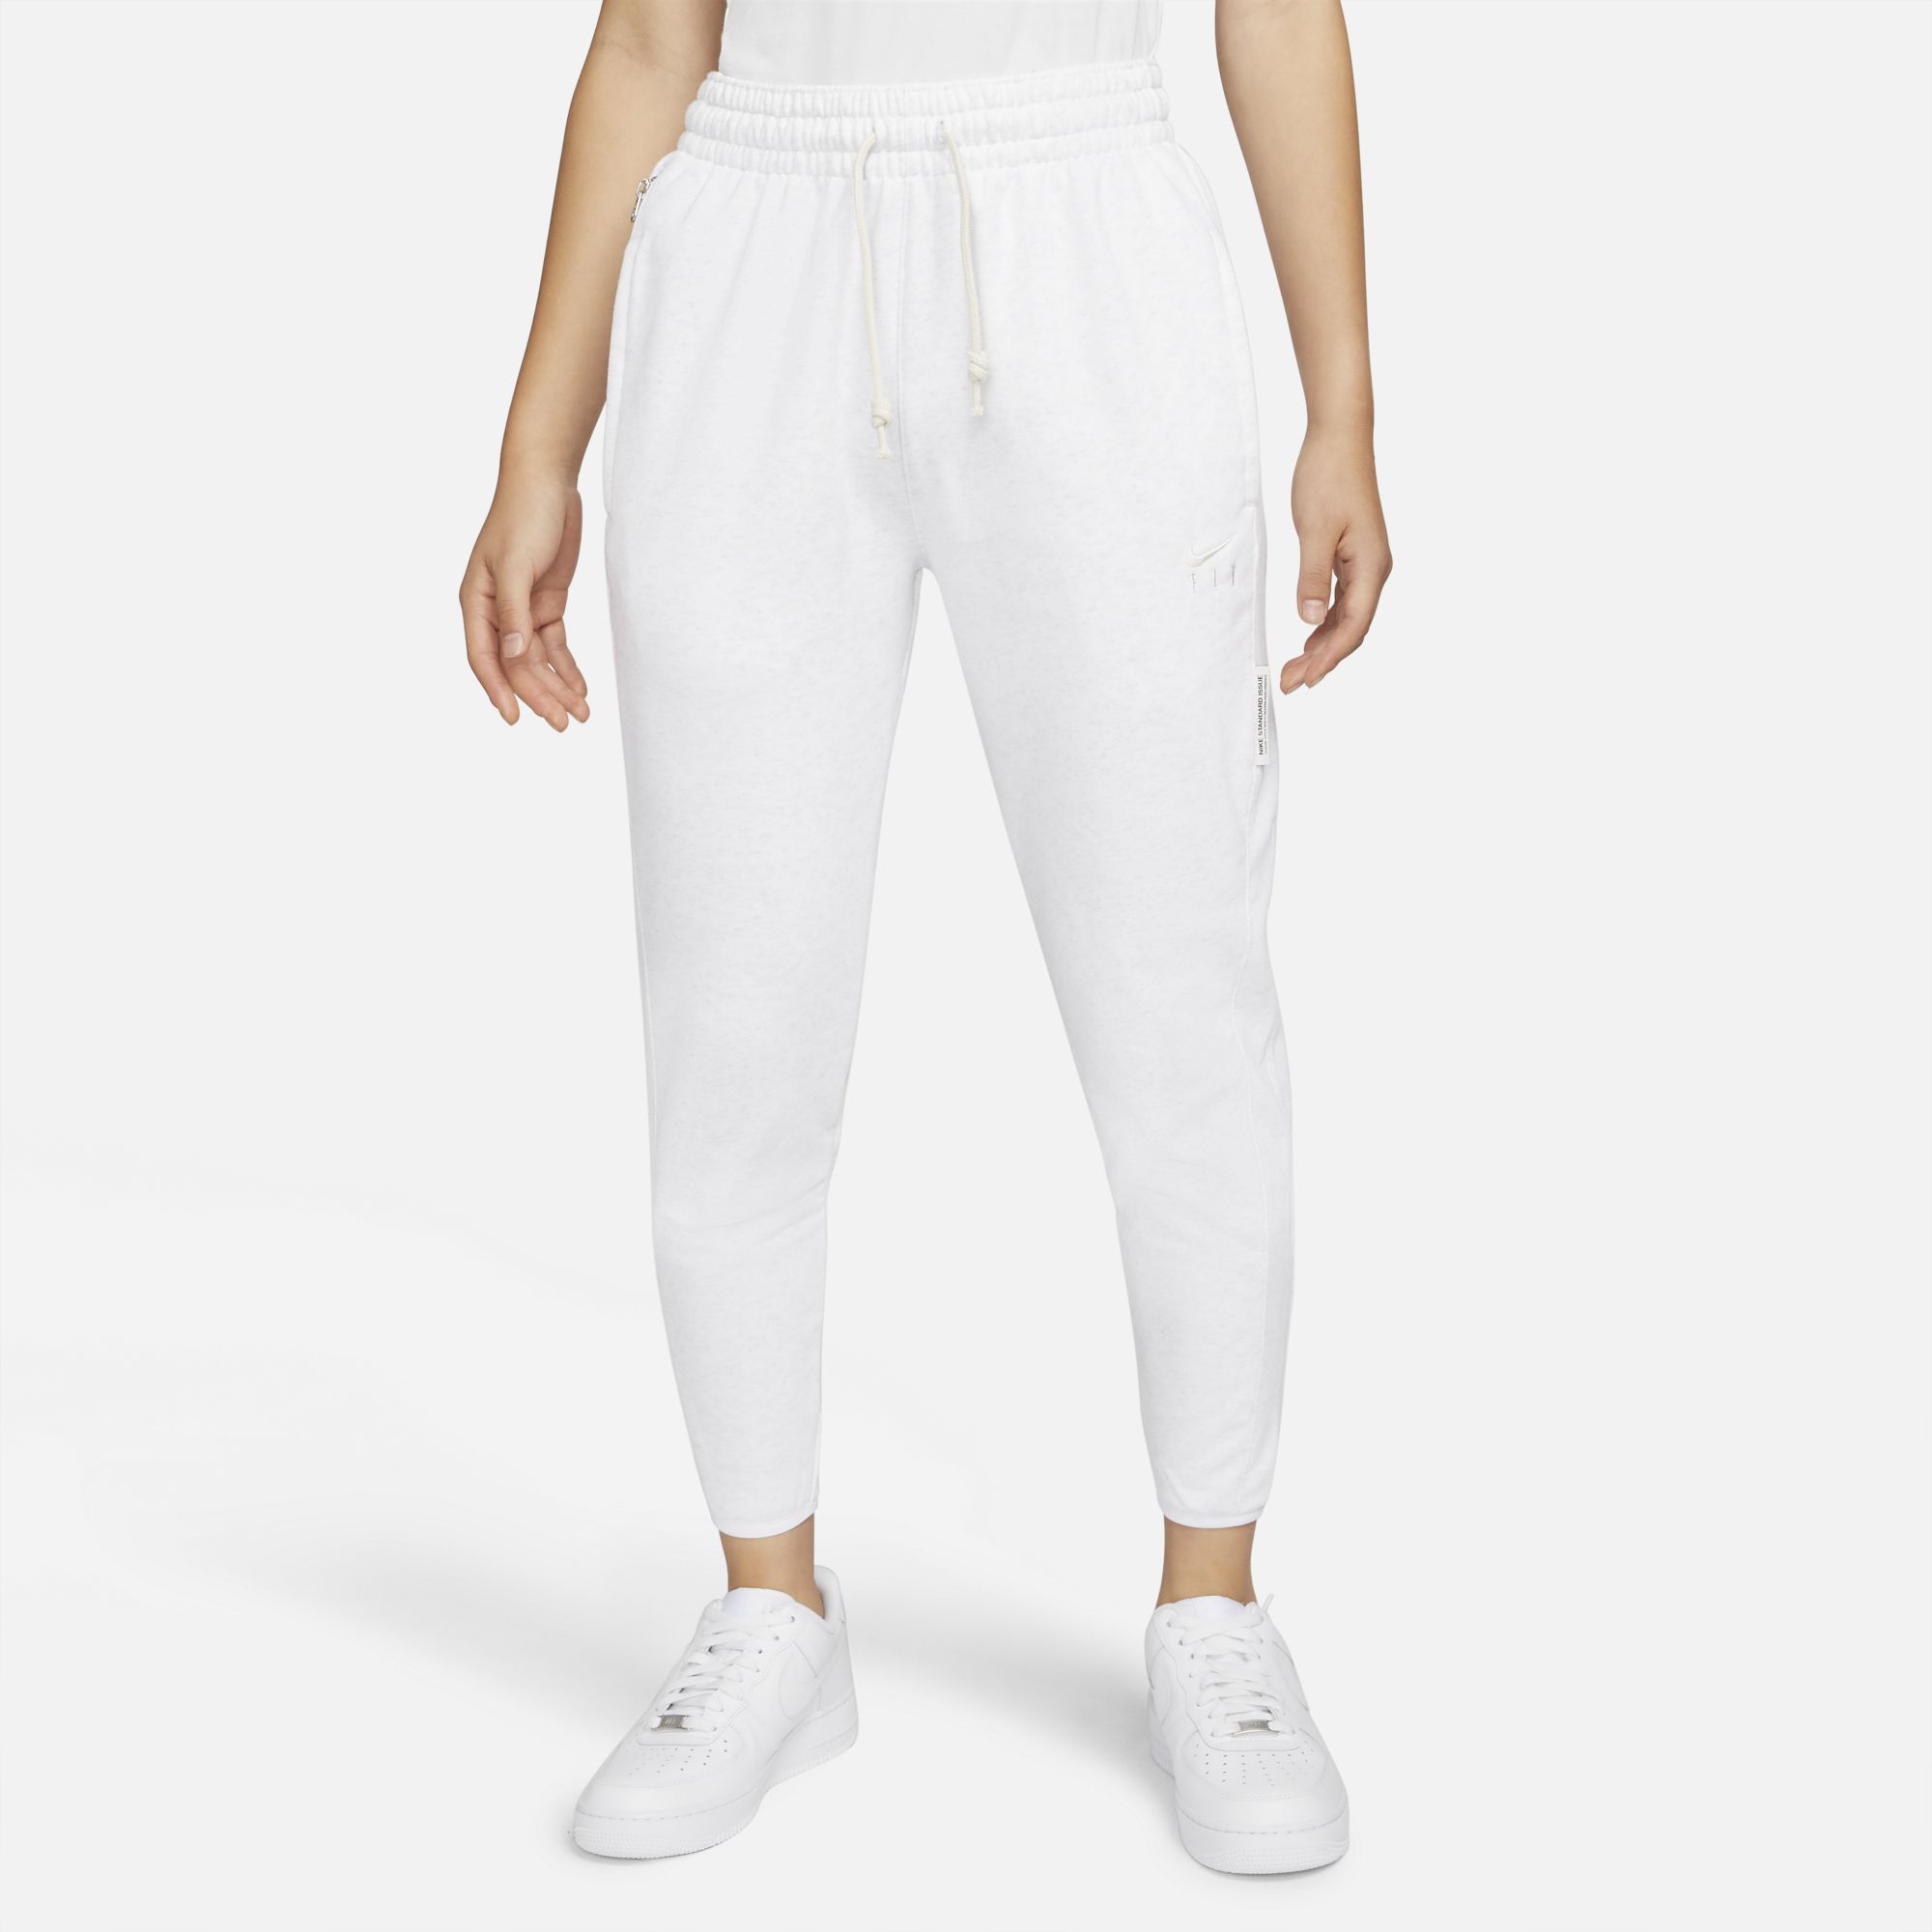 Nike W Dri-Fit Standard Issue Pant, Birch Heather/Pale Ivory